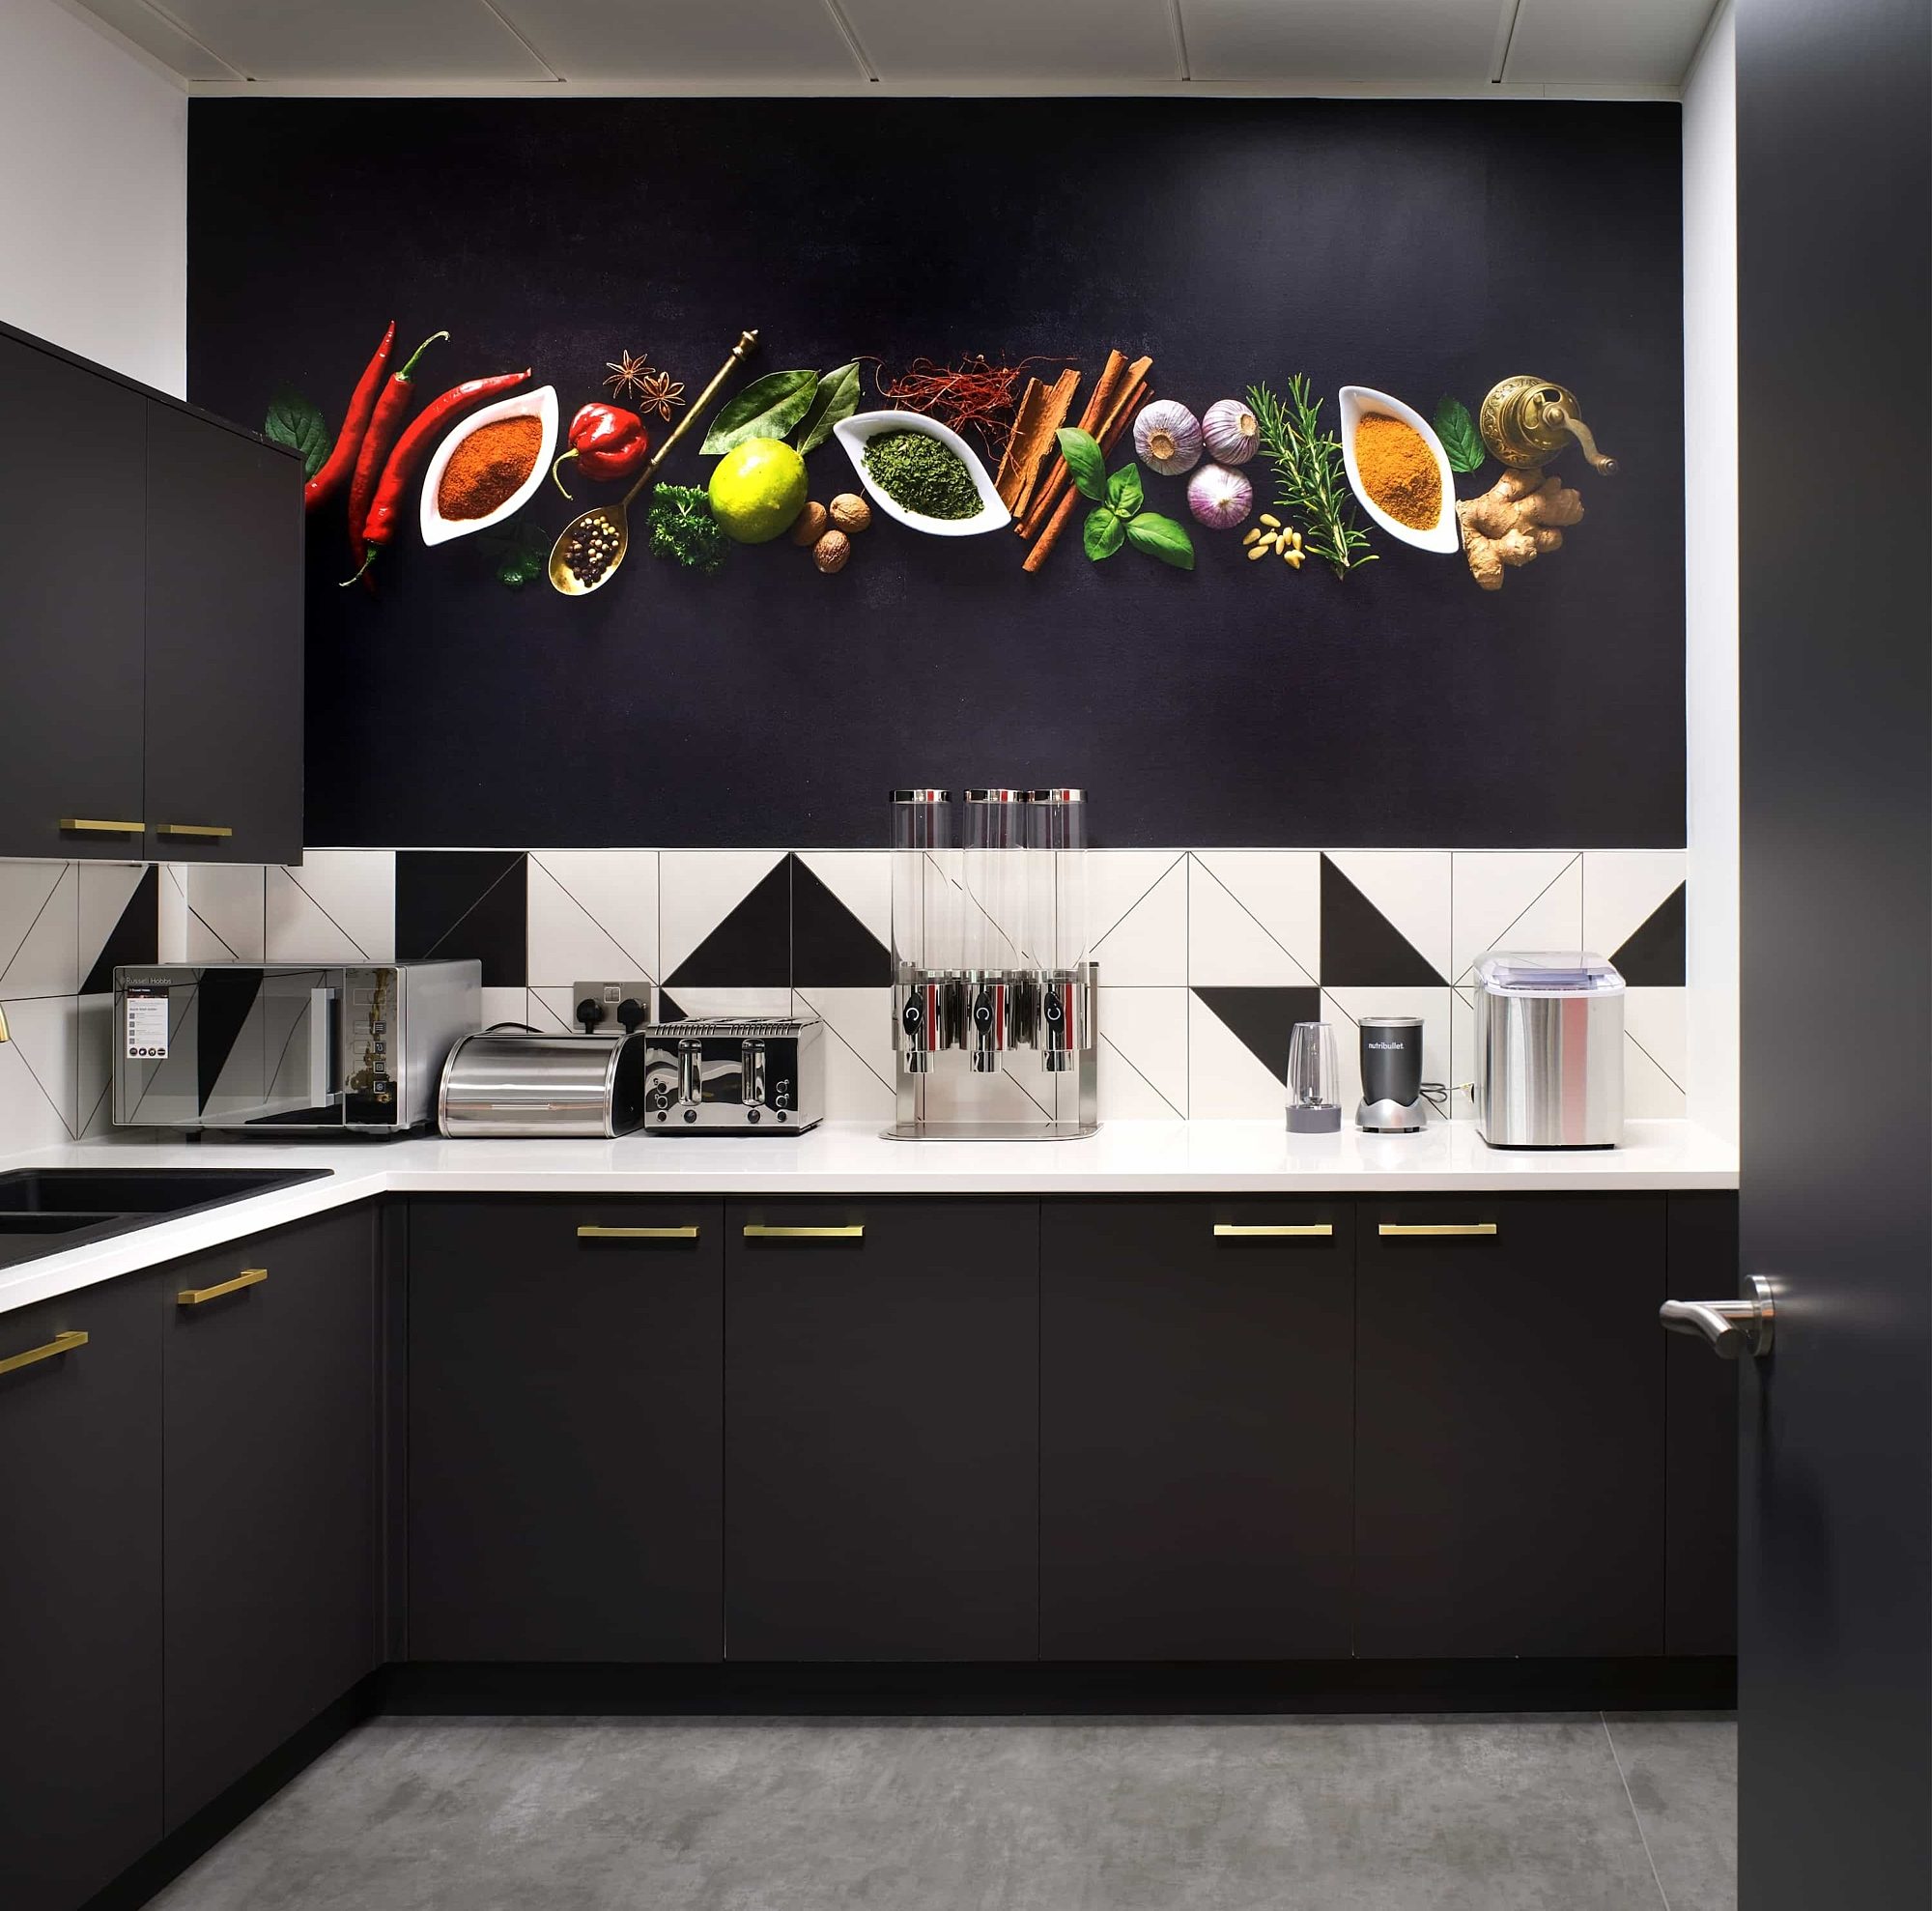 Vibrant Foods office kitchen design